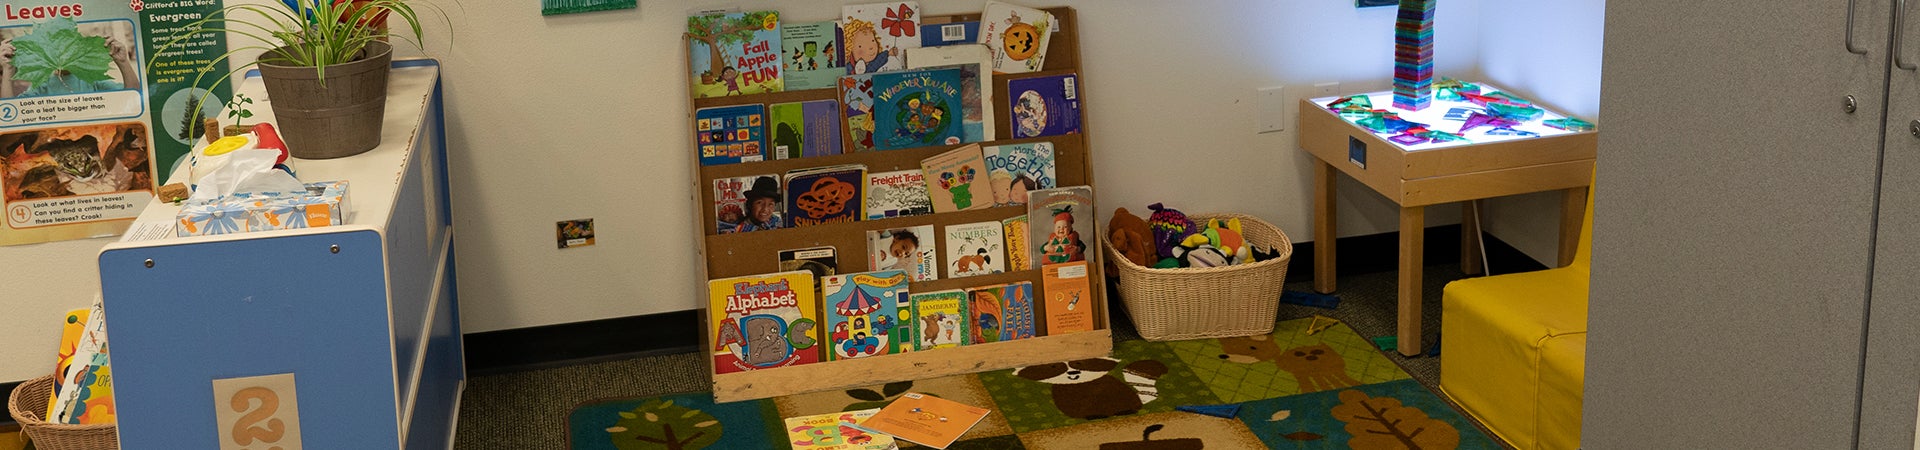 Early Childhood Education Facilities Slider Image